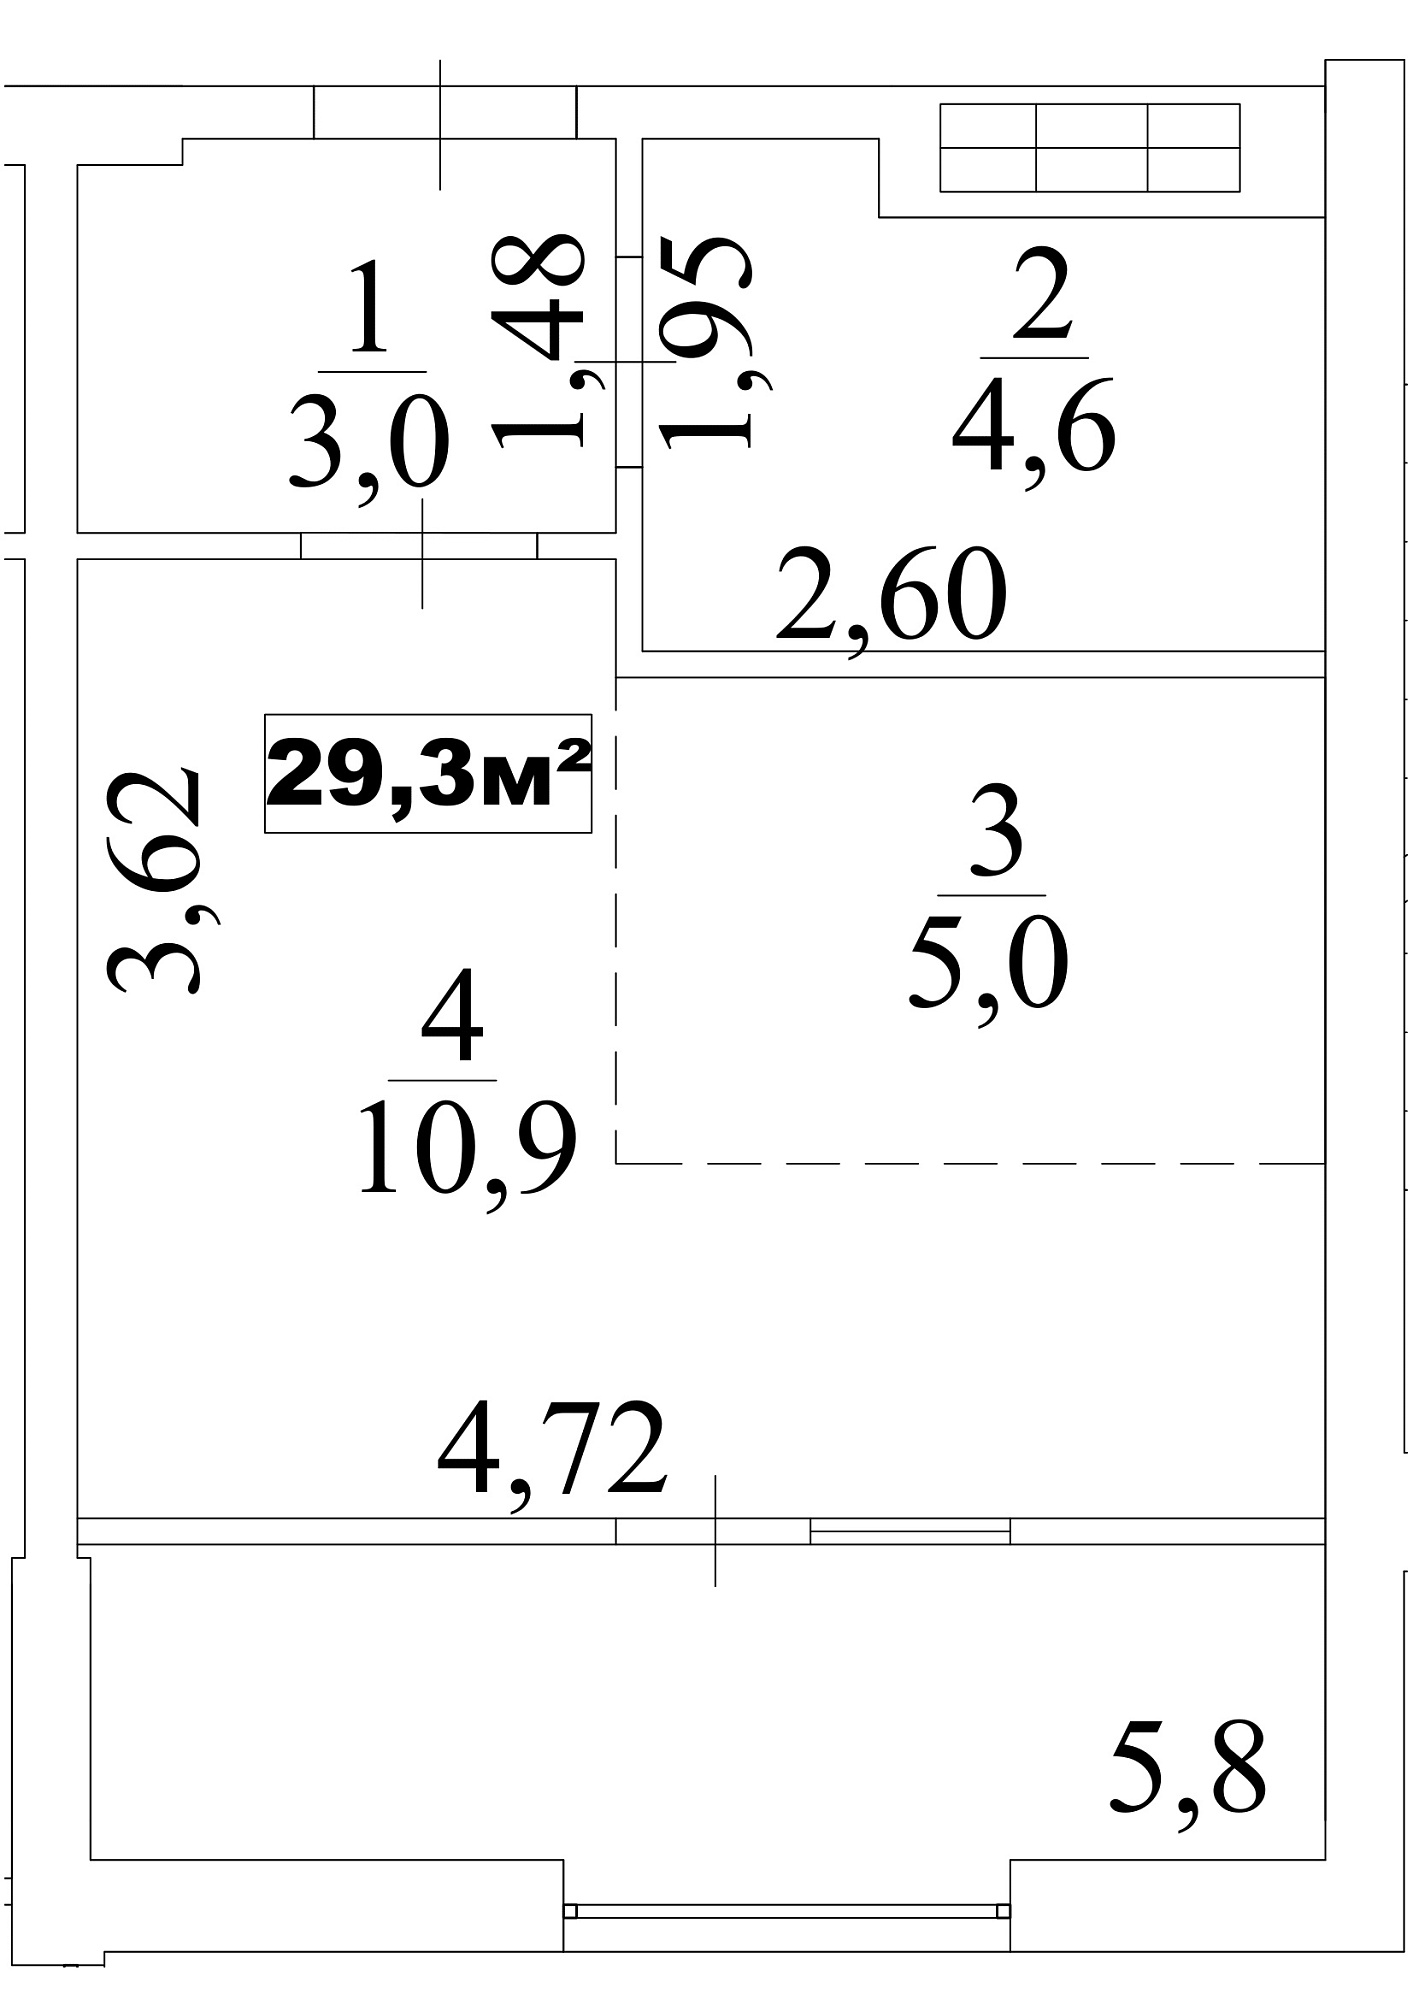 Planning Smart flats area 29.3m2, AB-10-02/0010а.